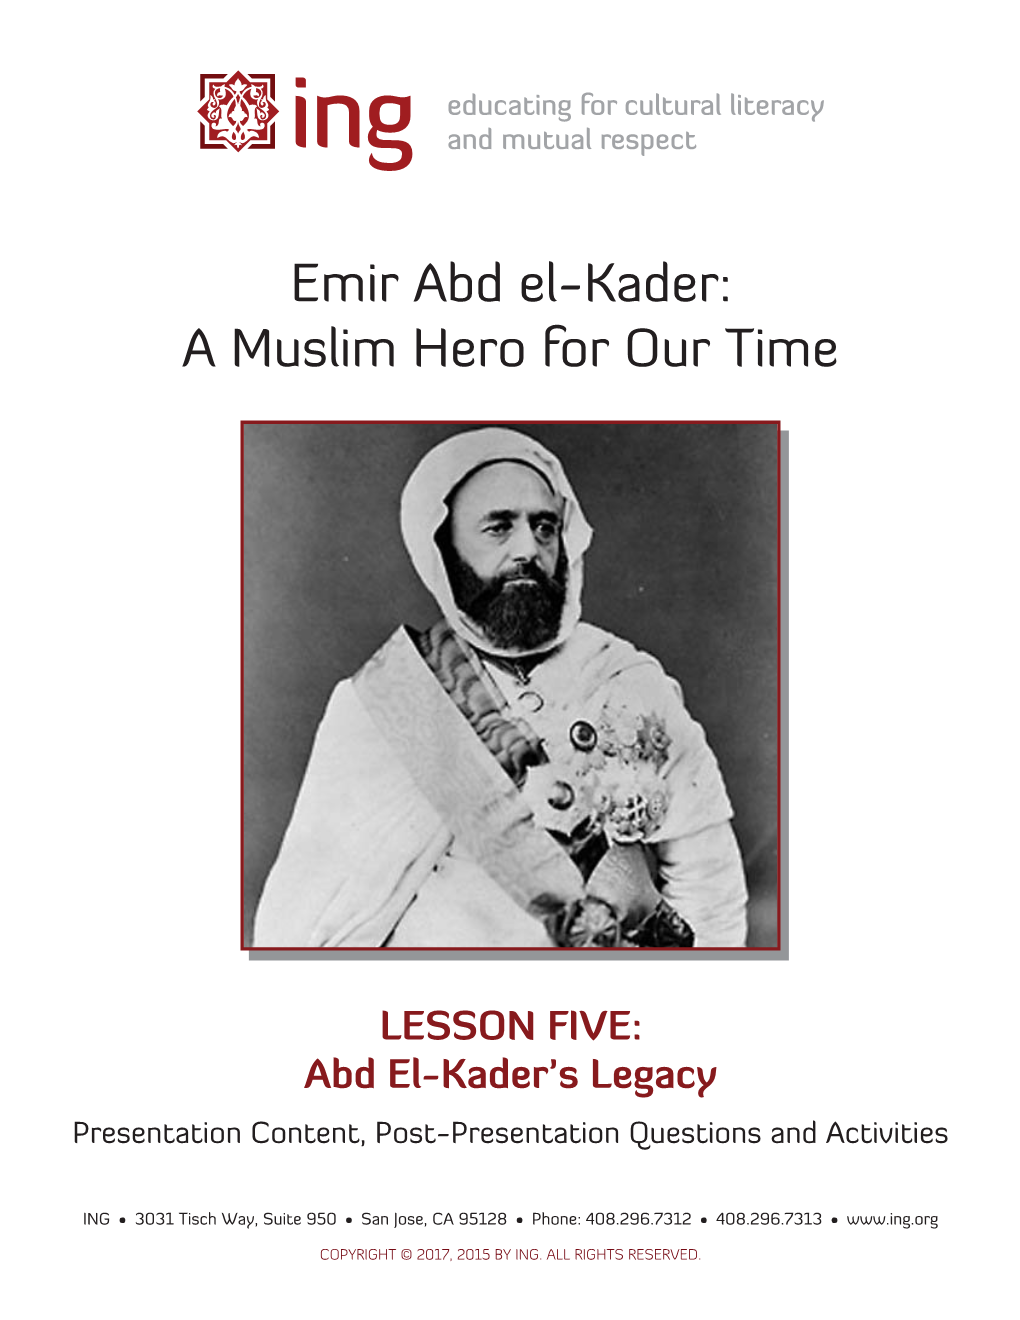 Emir Abd El-Kader: a Muslim Hero for Our Time